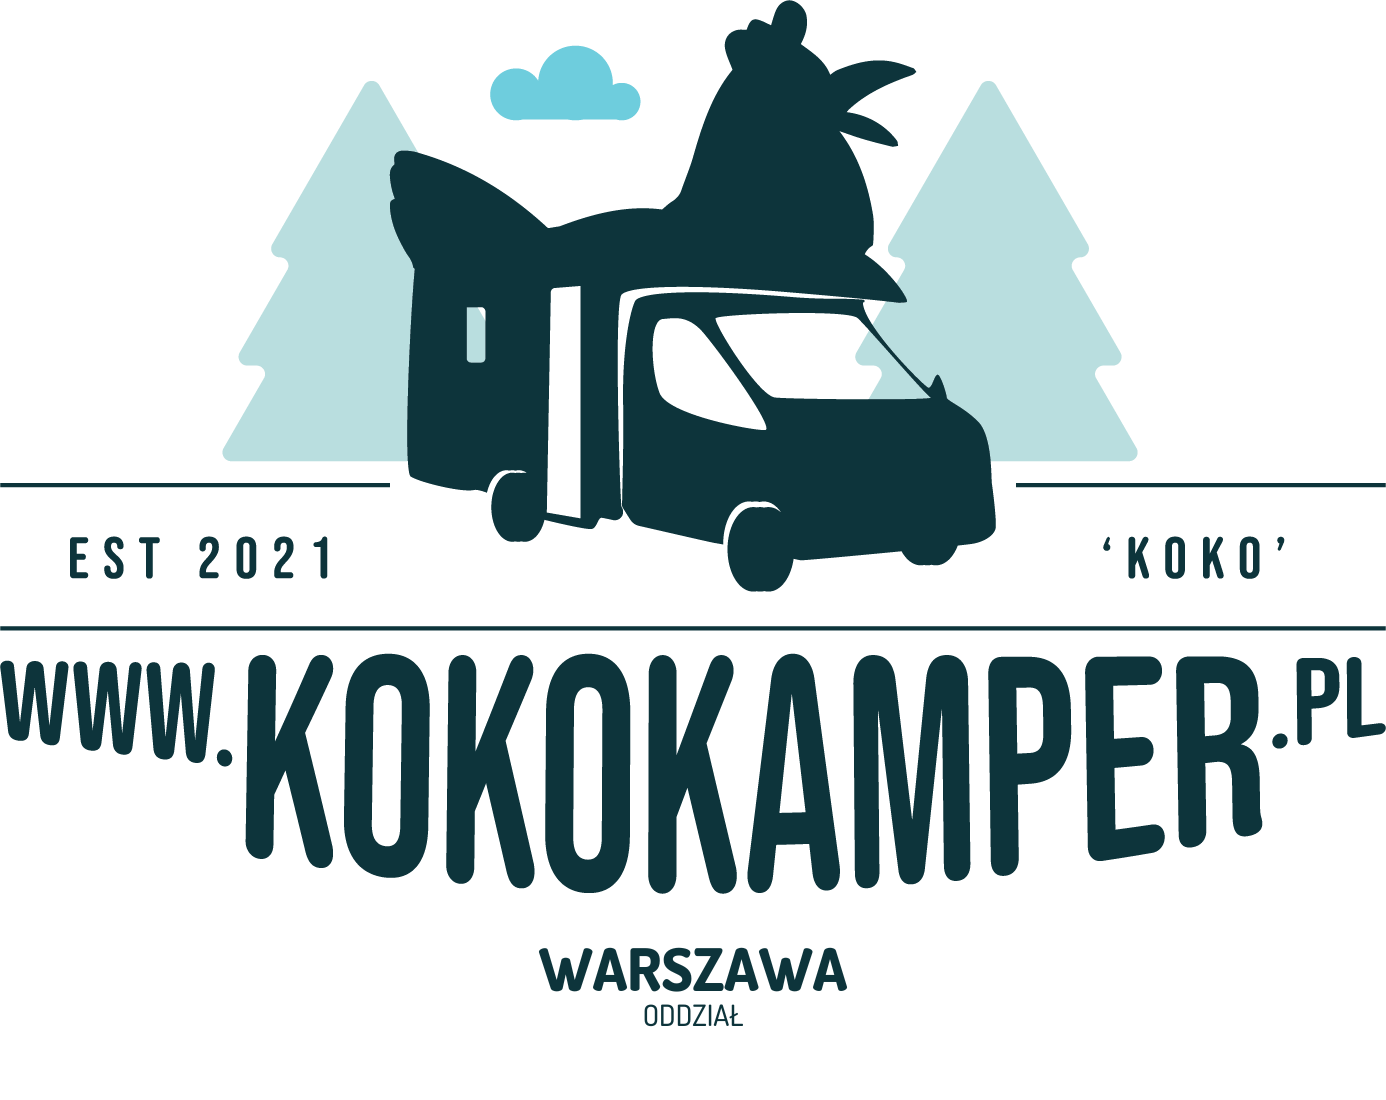  KoKo Kamper Warszawa